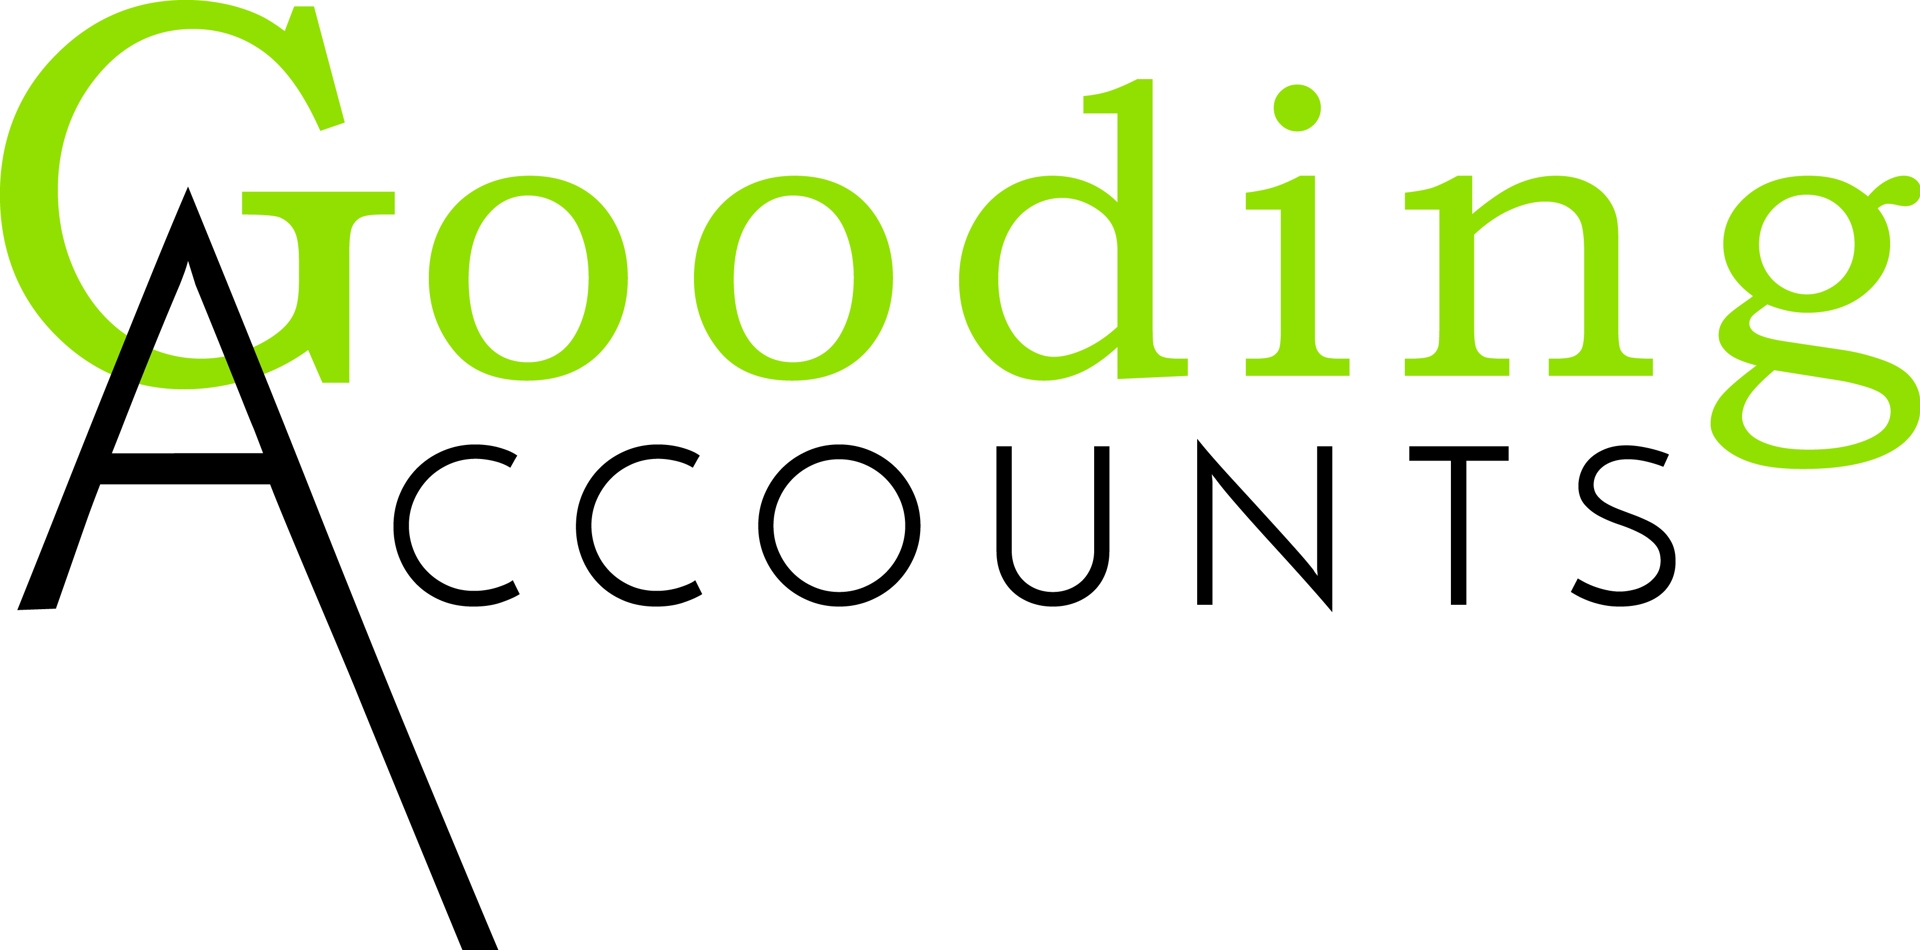 Goodings Accounts logo